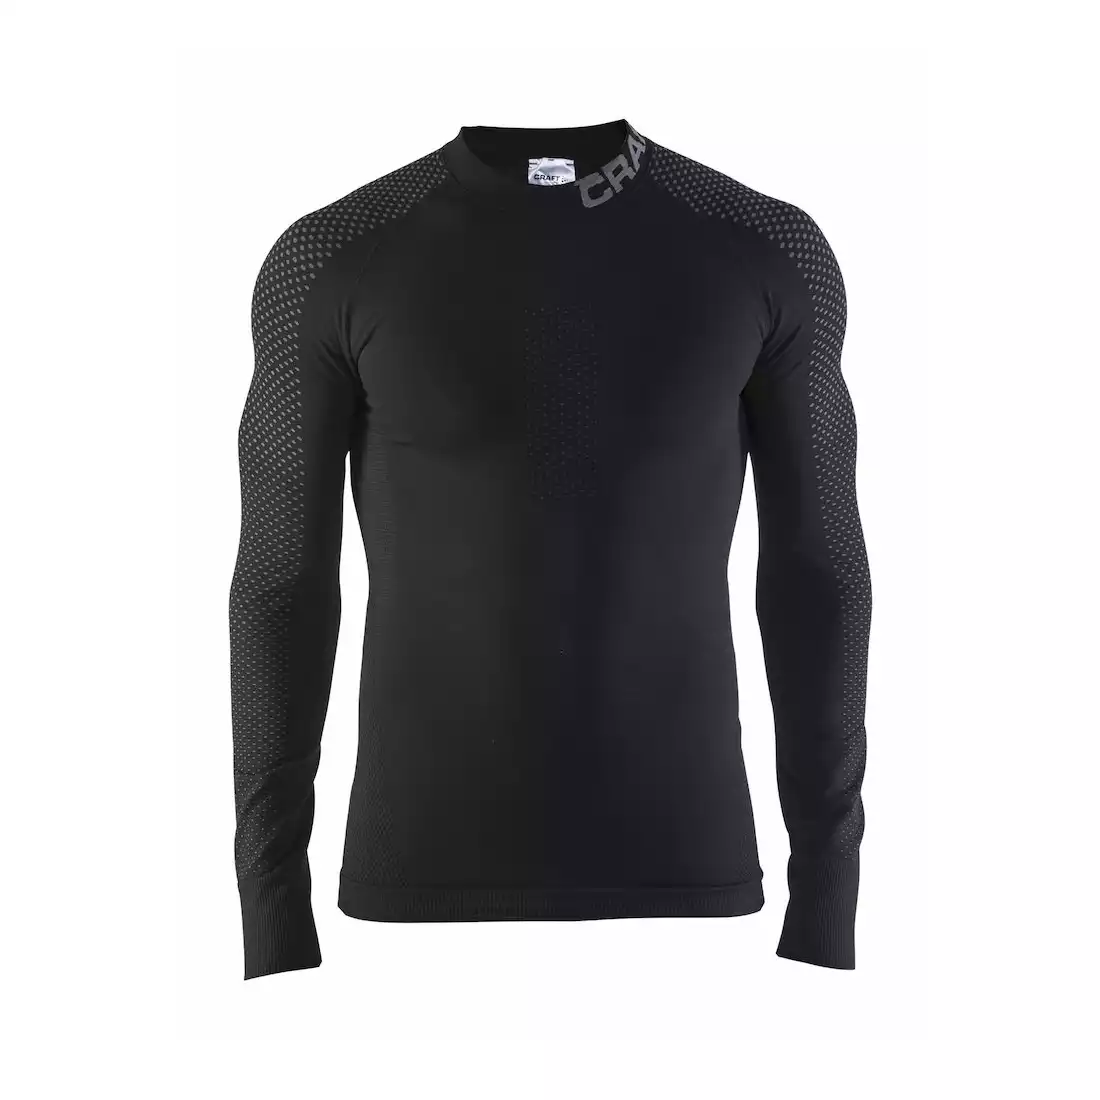 CRAFT WARM INTENSITY bielizna koszulka męska, czarna 1905350-999985